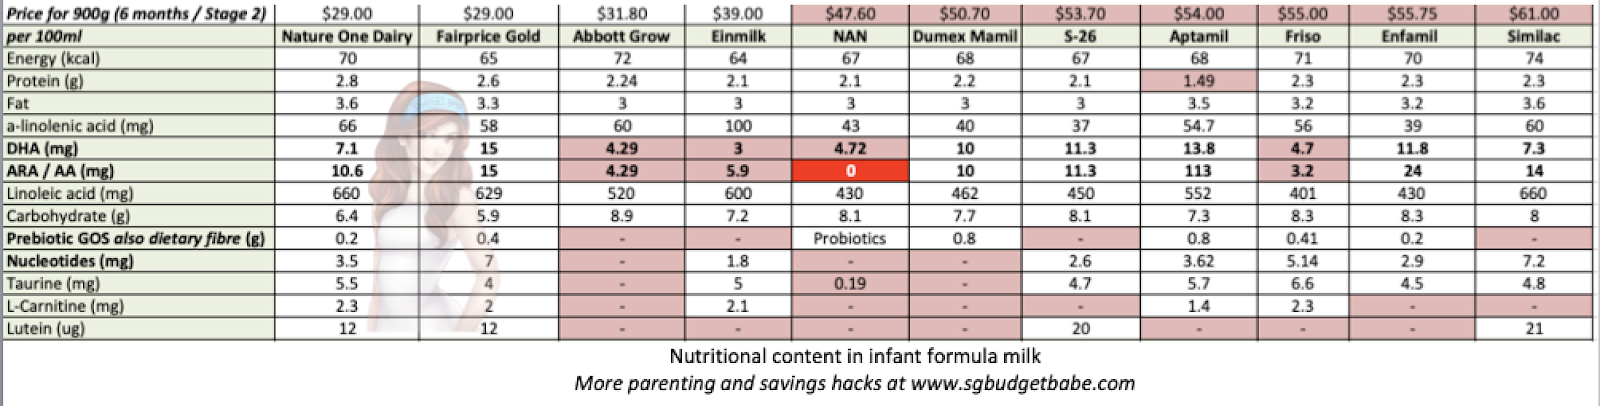 Baby Formula Price Comparison Chart